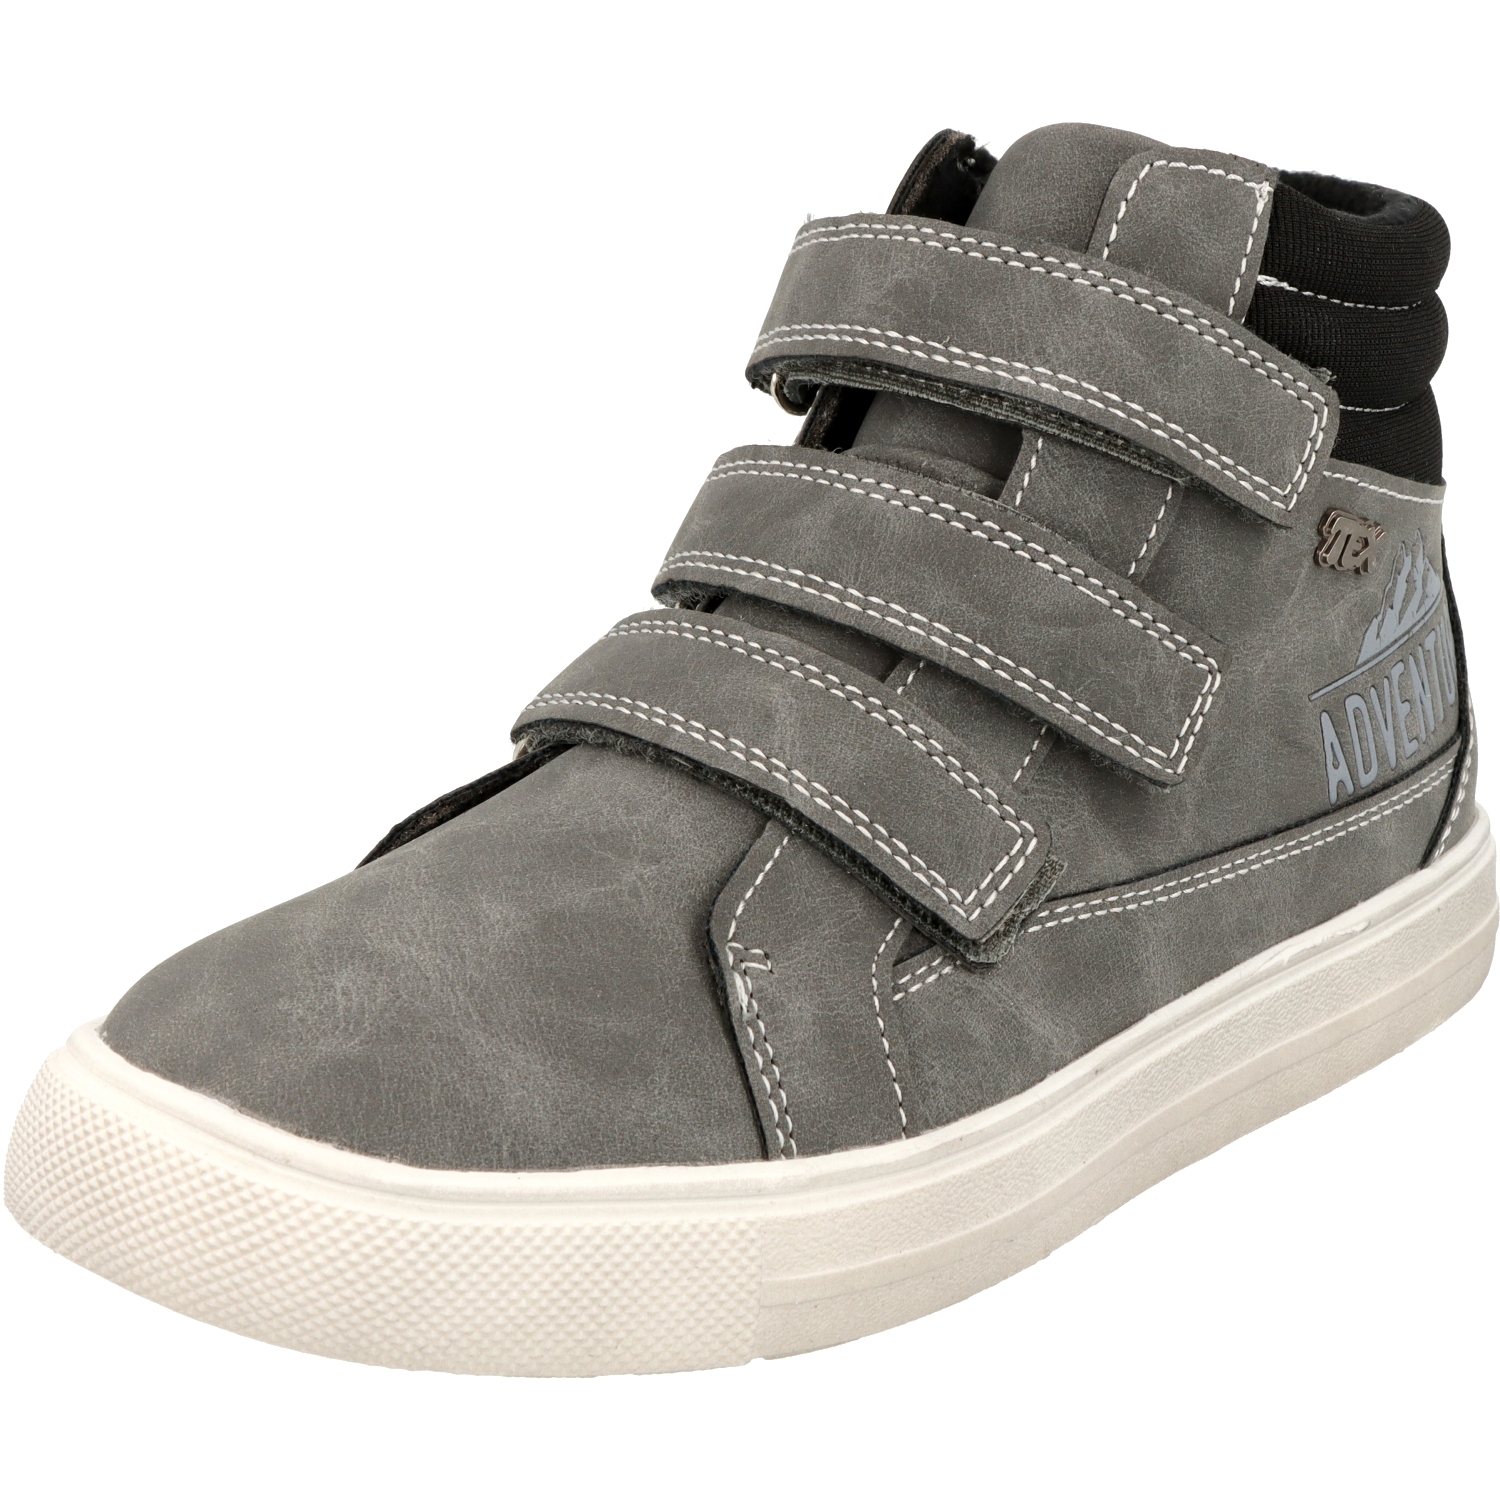 Indigo Jungen Schuhe 453-028 stylische HiTop Sneaker Grau 3-fach Klettverschluss